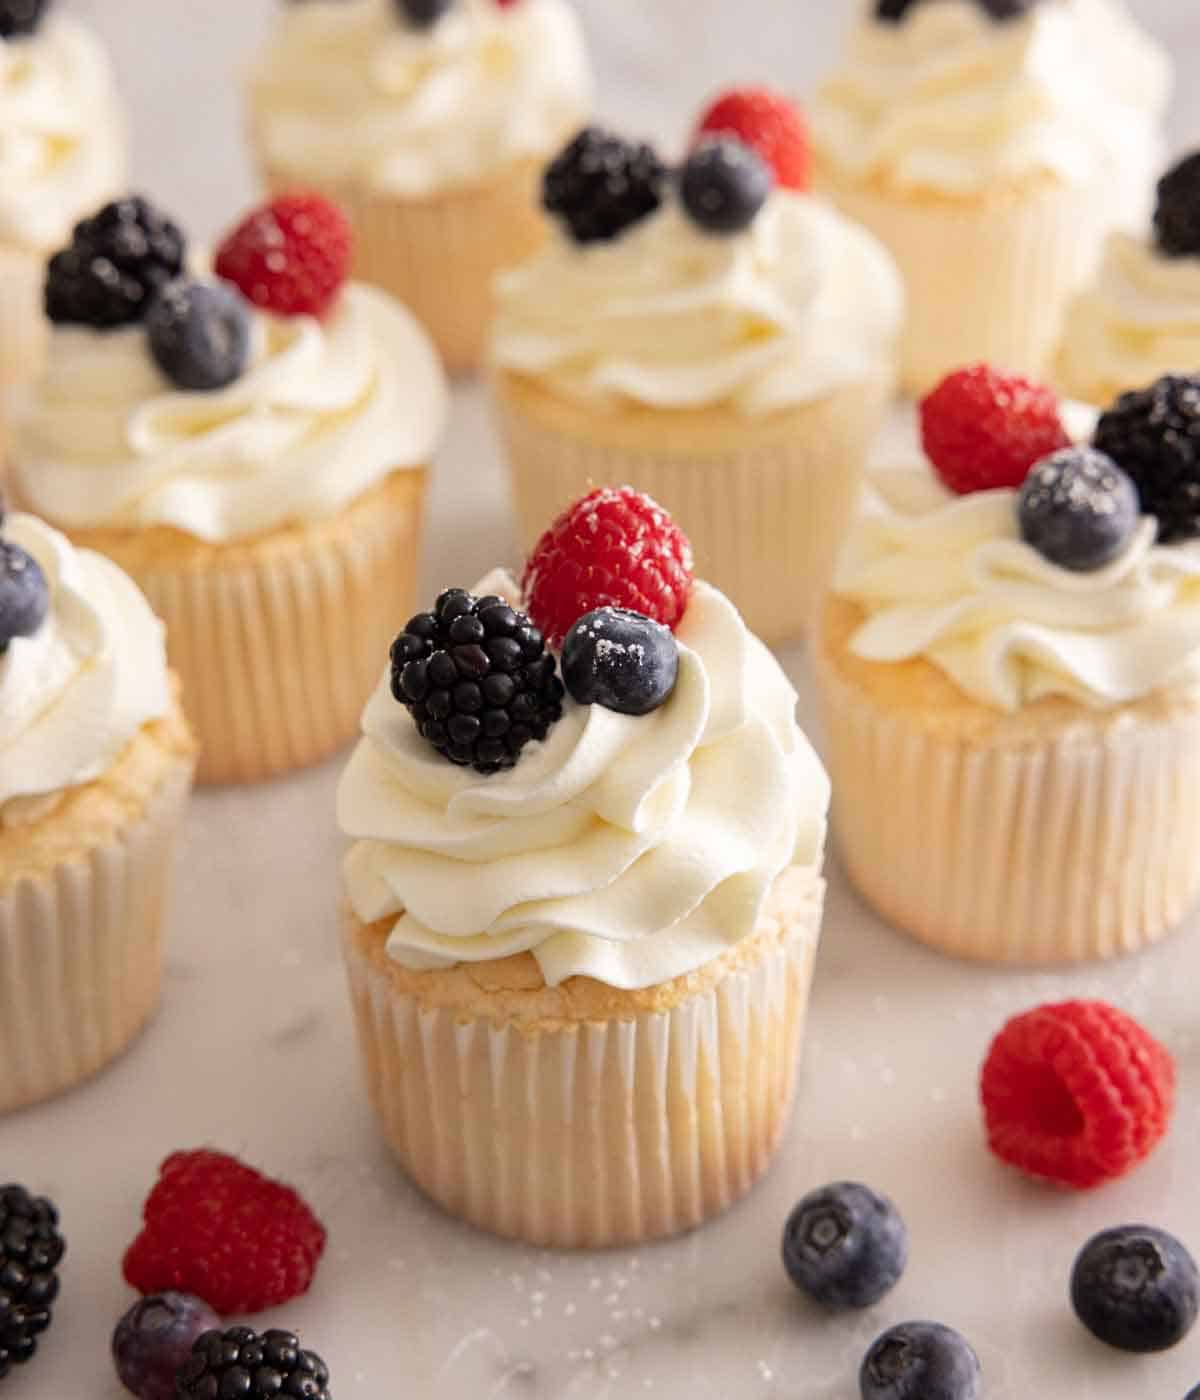 Multiple angel food cupcakes with berries on top.